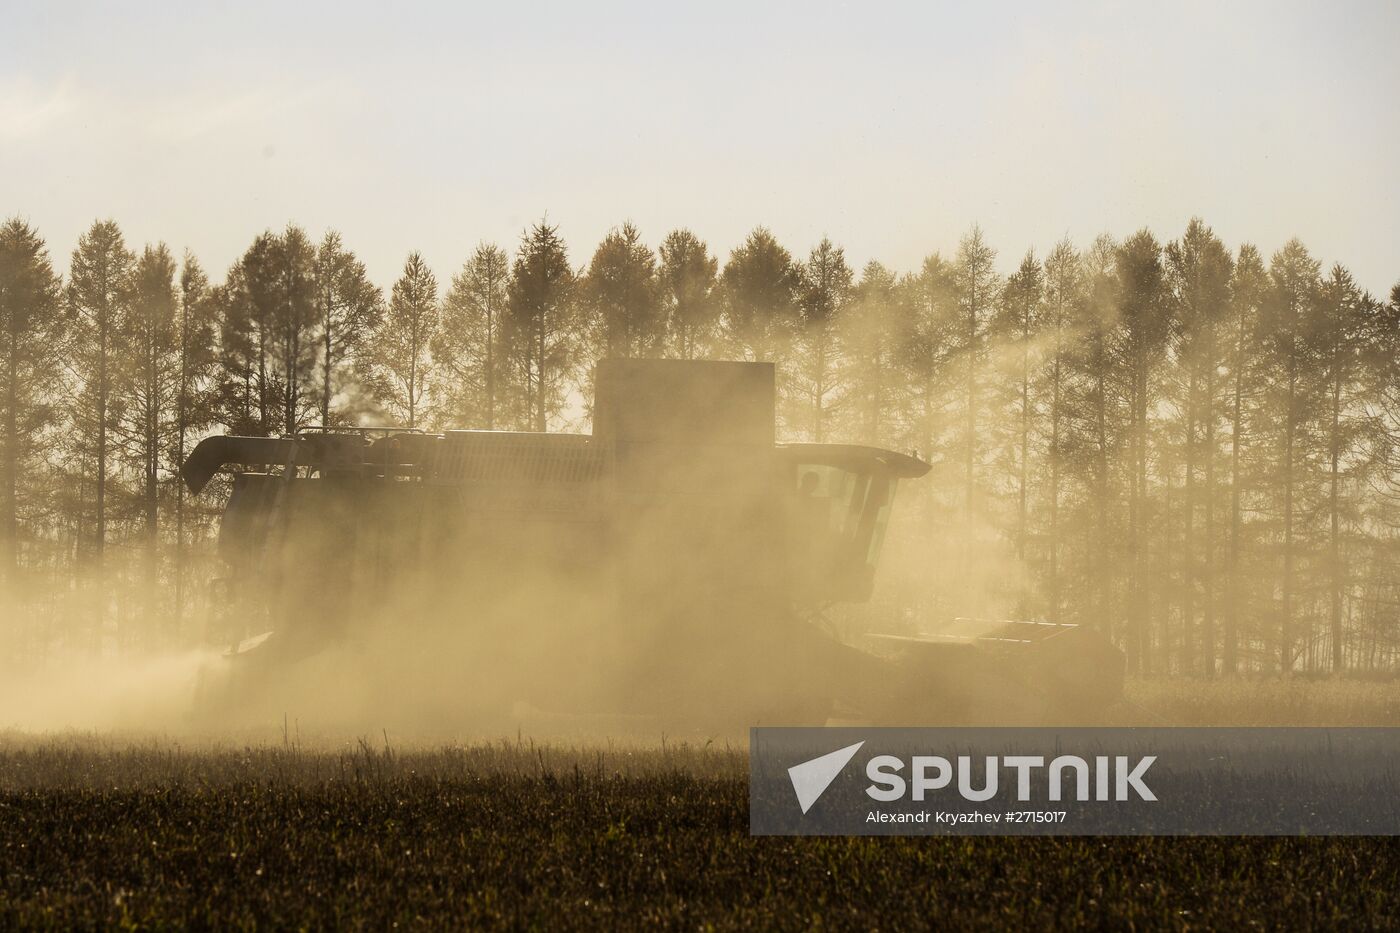 Grain harvesting in Novosibirsk Region